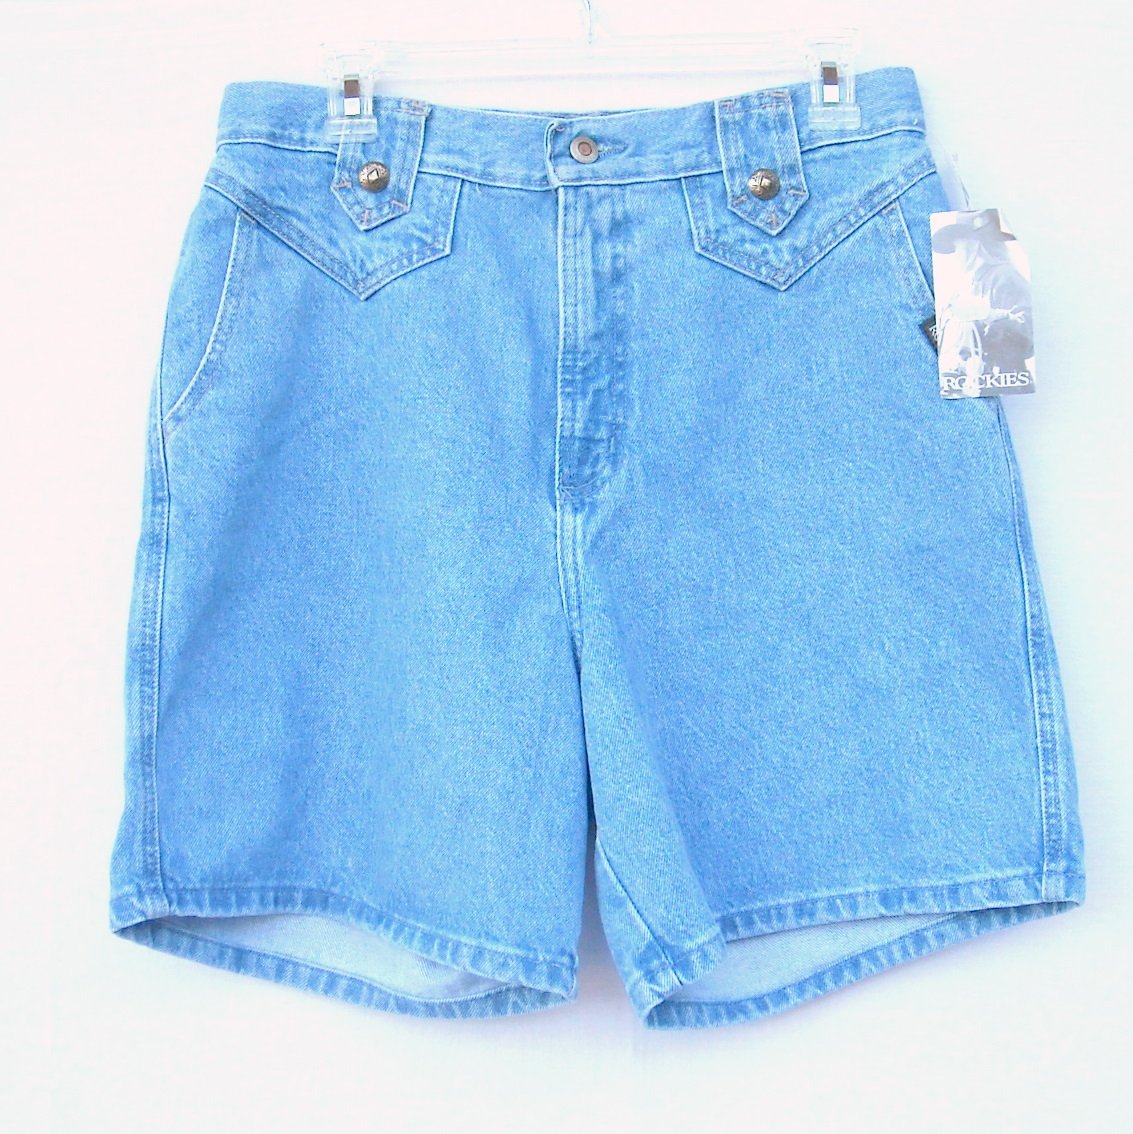 Rockies Jeanswear Blue Denim Shorts Size 11